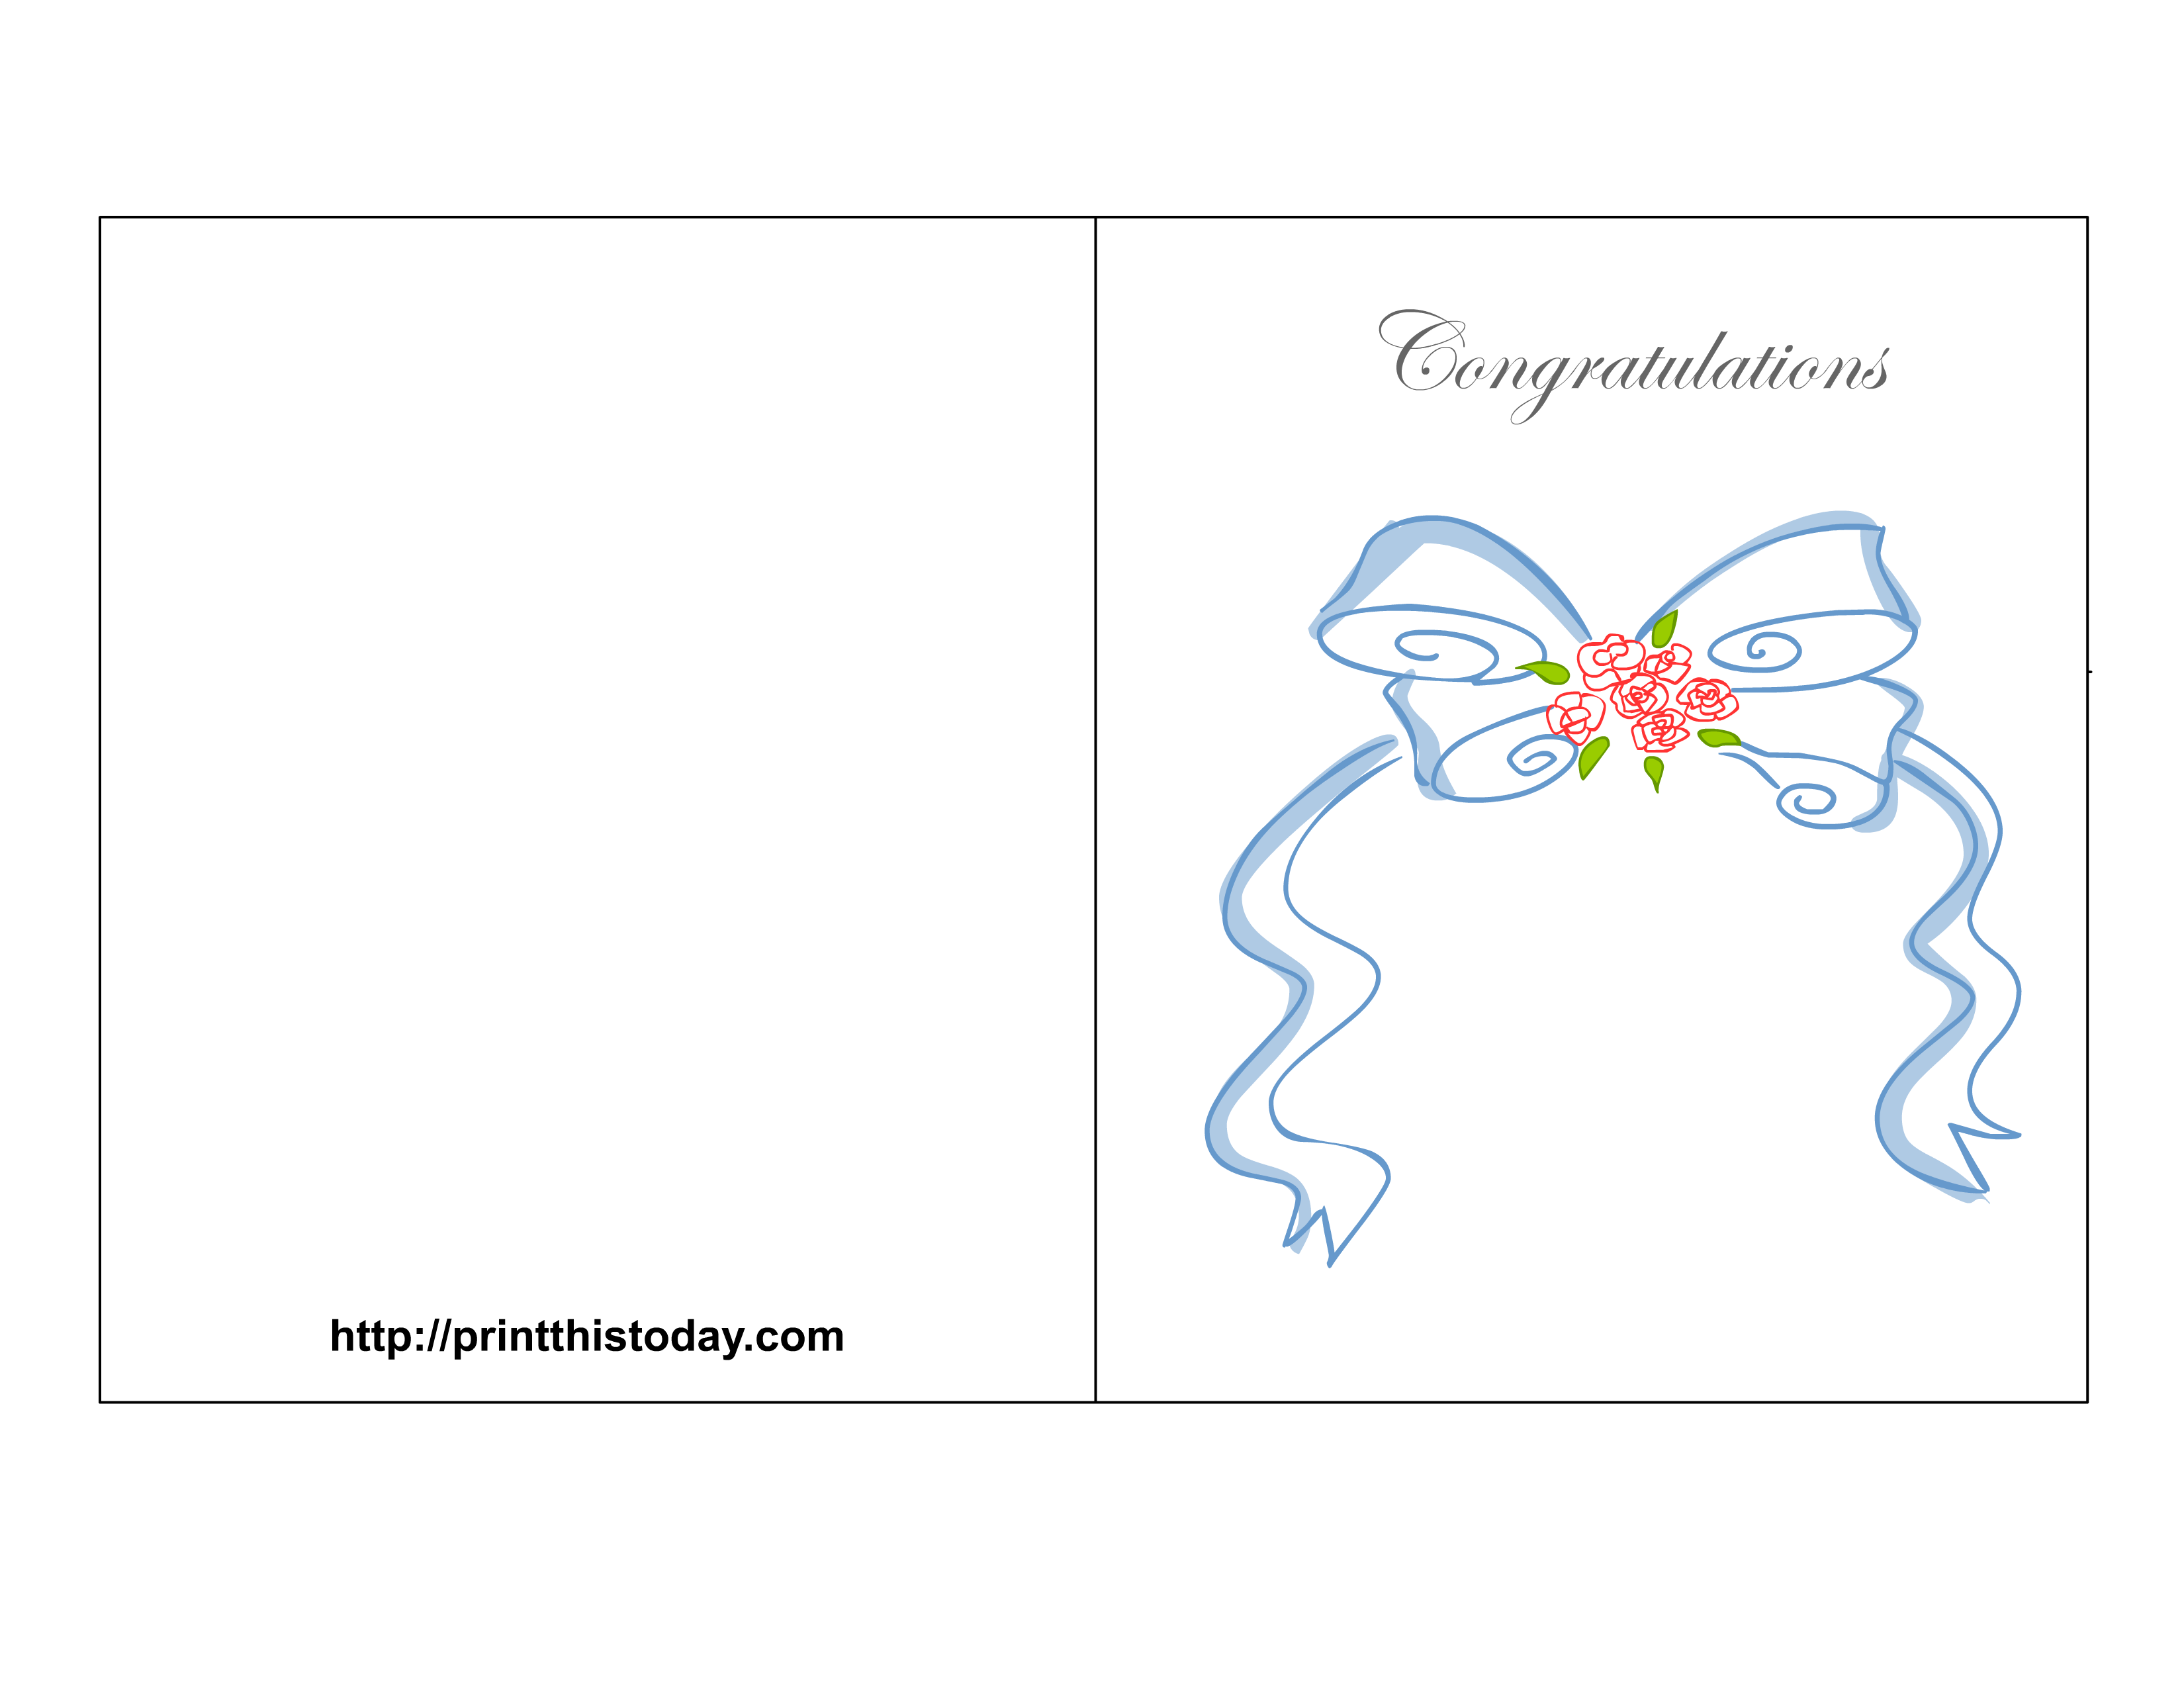 Free Wedding Greeting Card Template